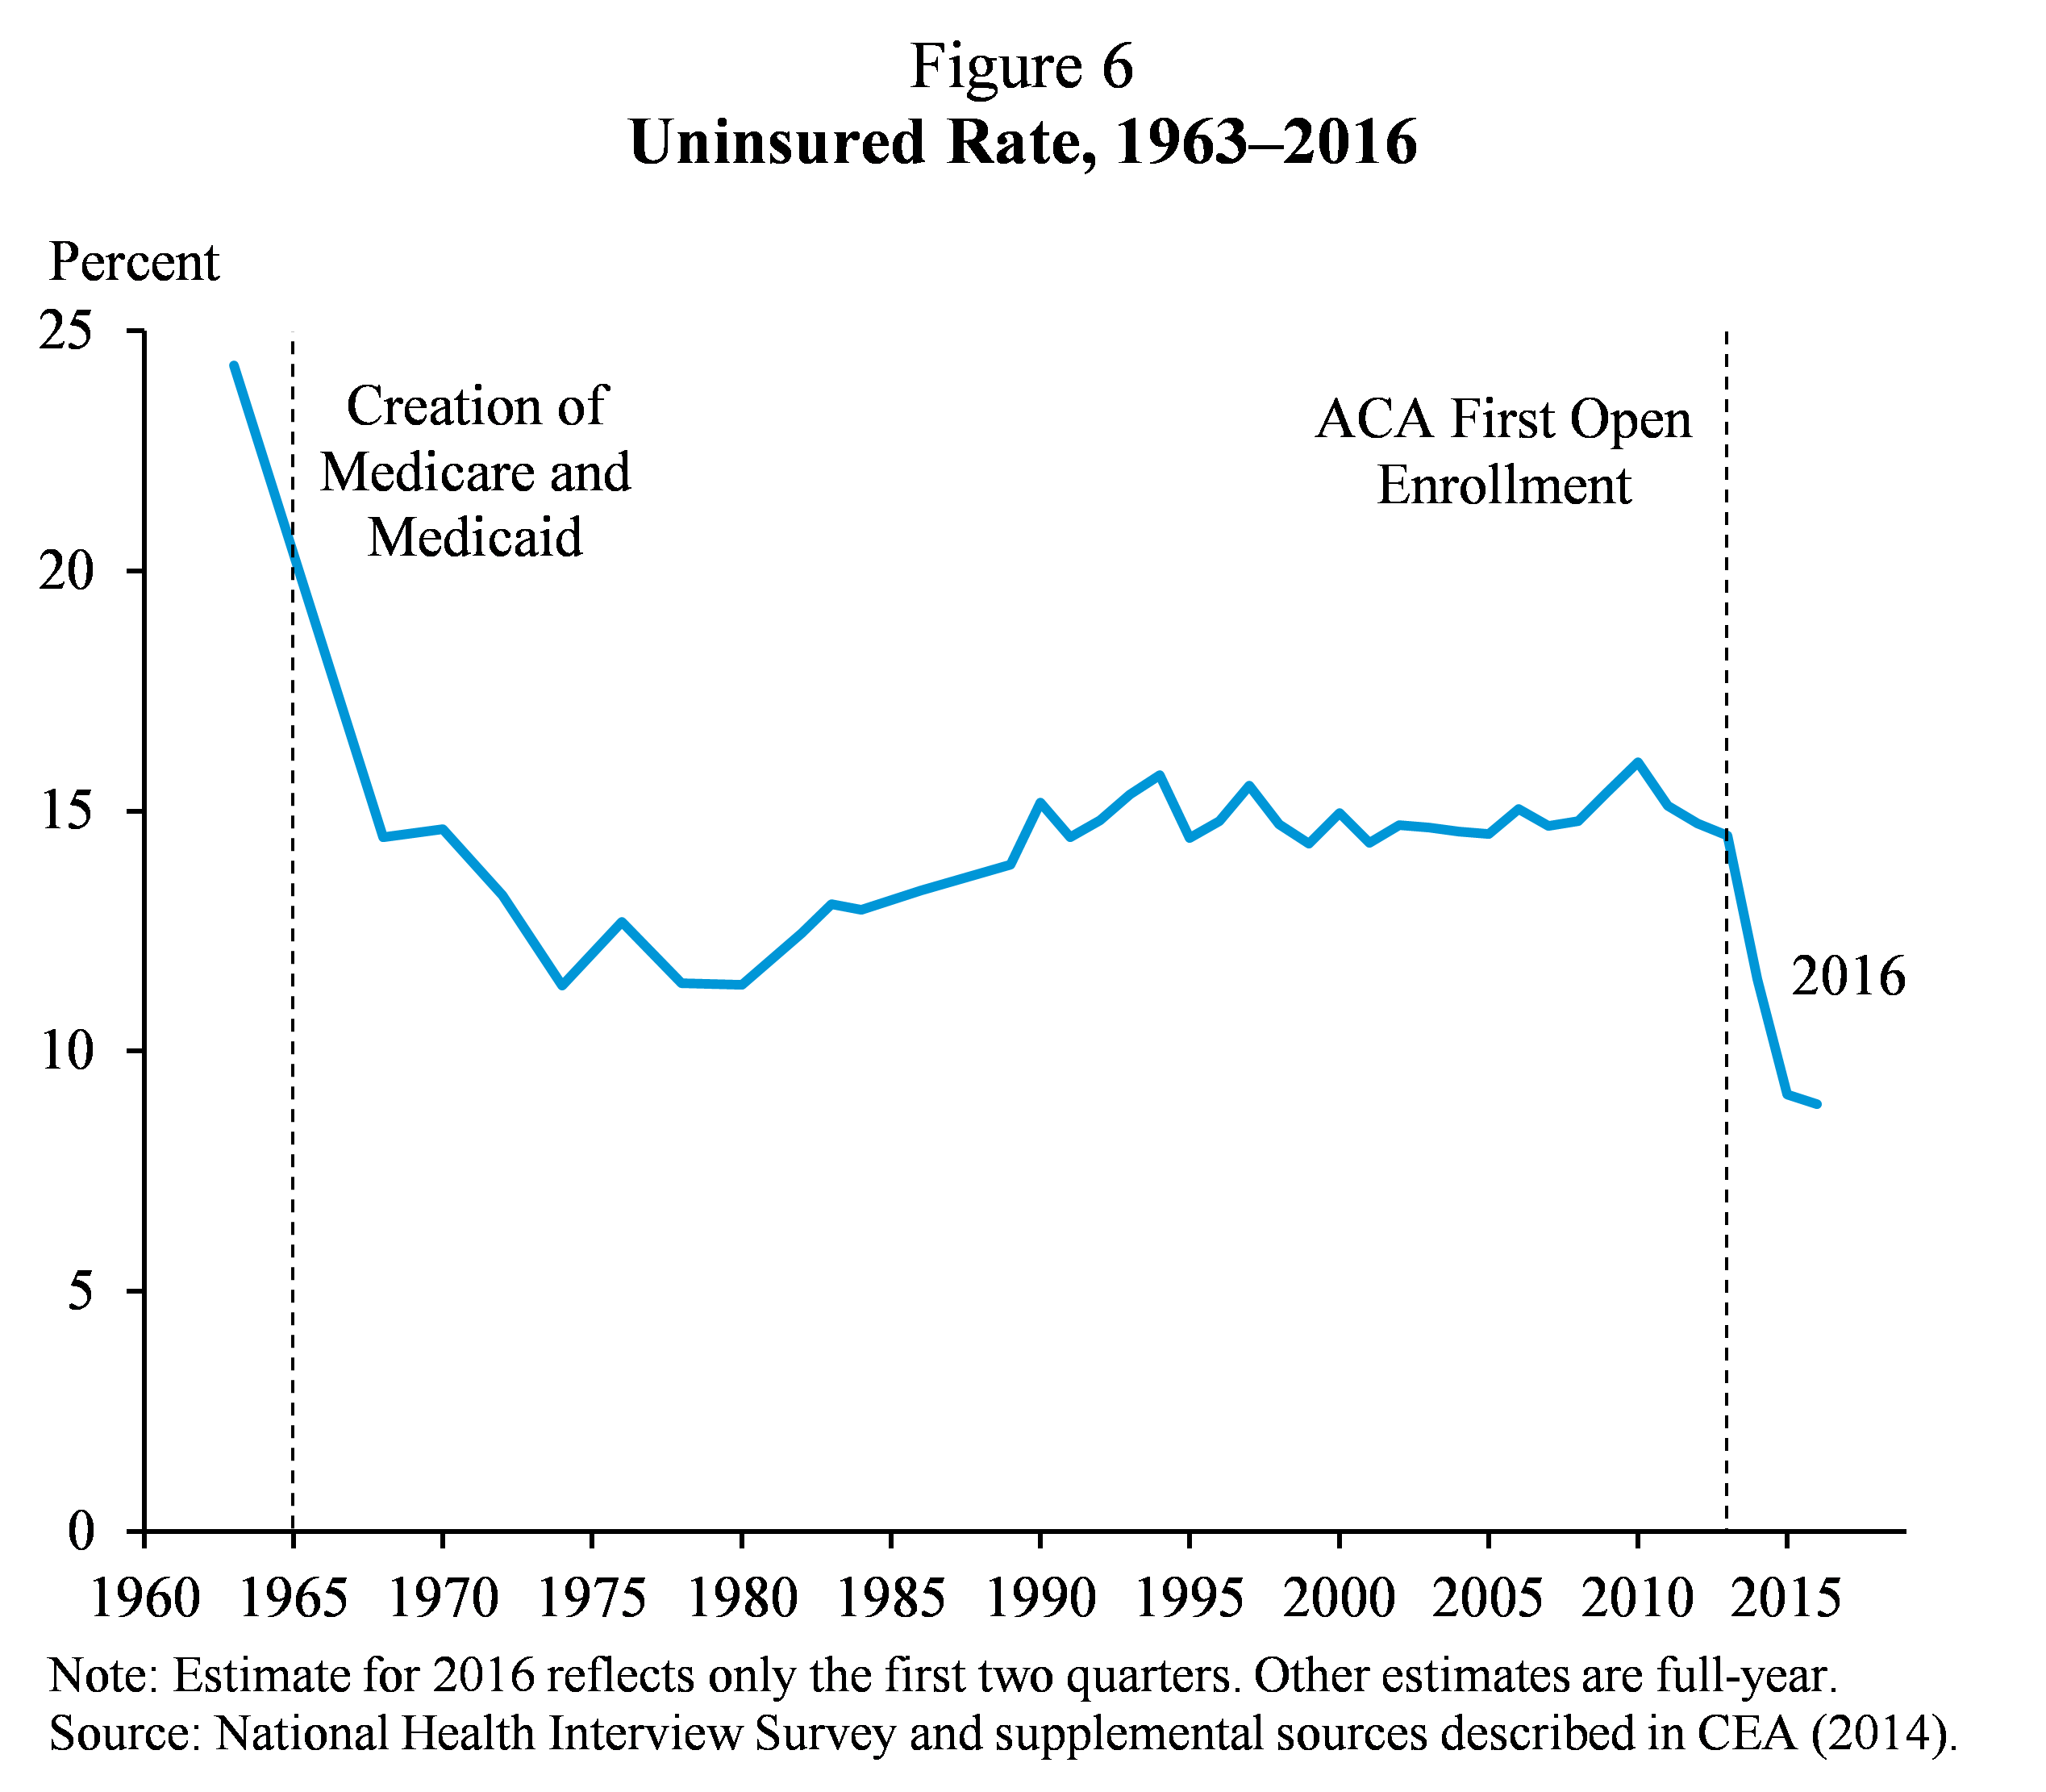 Figure 6.  Uninsured Rate, 1963-2016